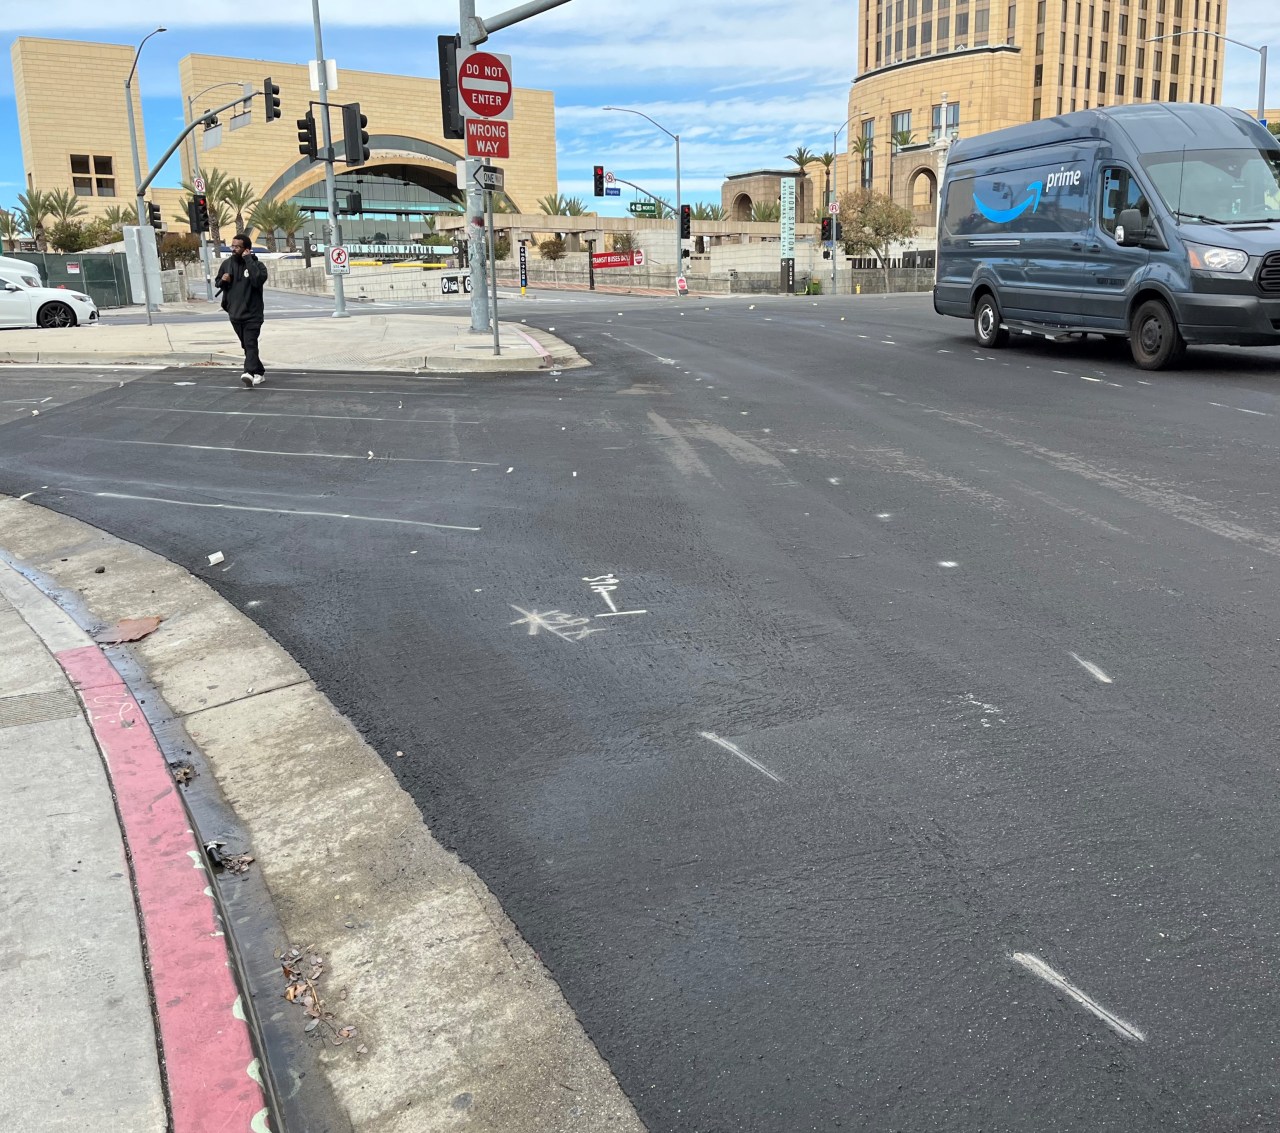 Preliminary bike lane markings on Ramirez Street, directly behind Union Station